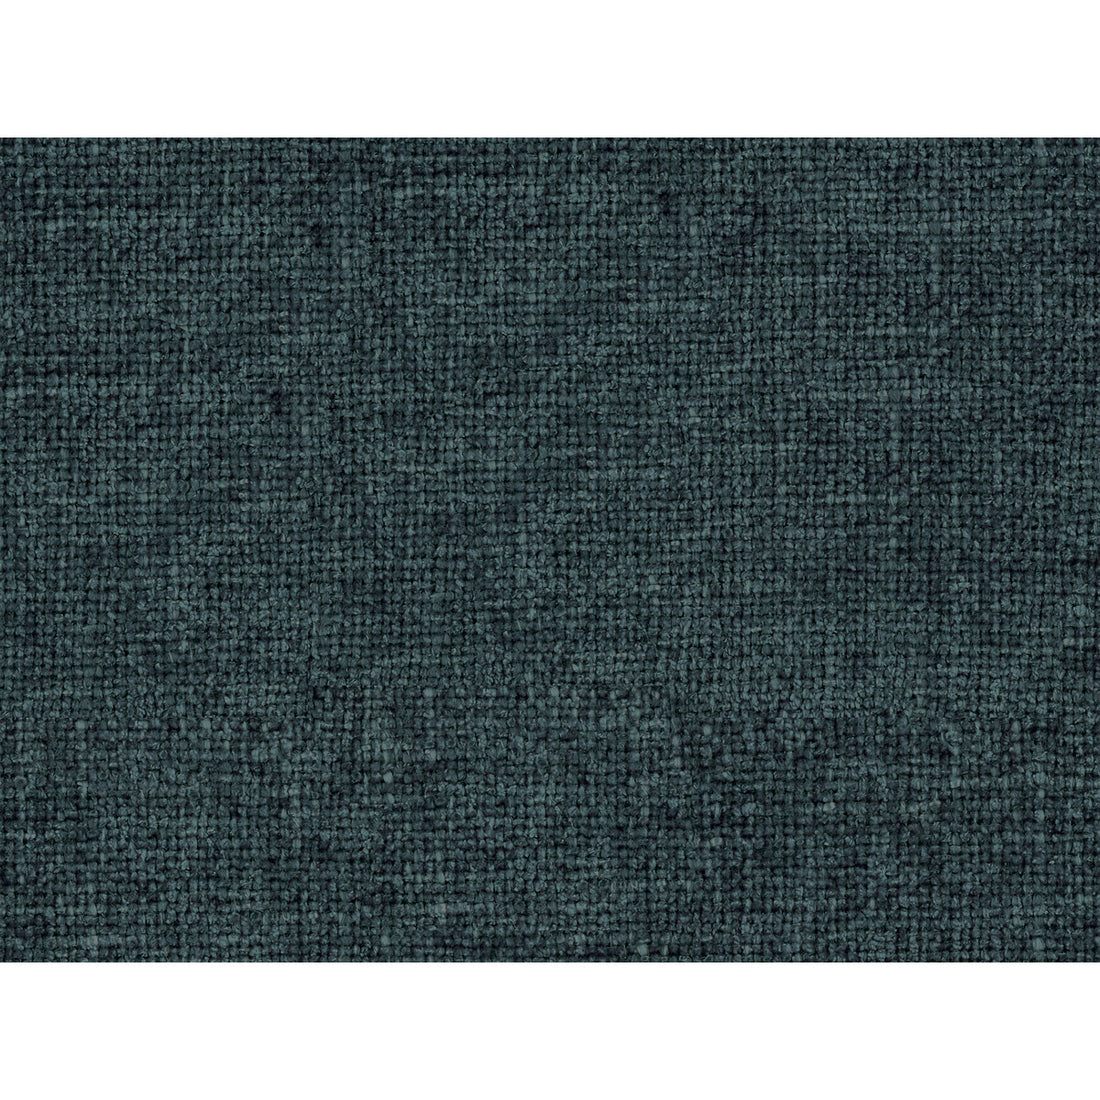 Kravet Smart fabric in 34293-50 color - pattern 34293.50.0 - by Kravet Smart